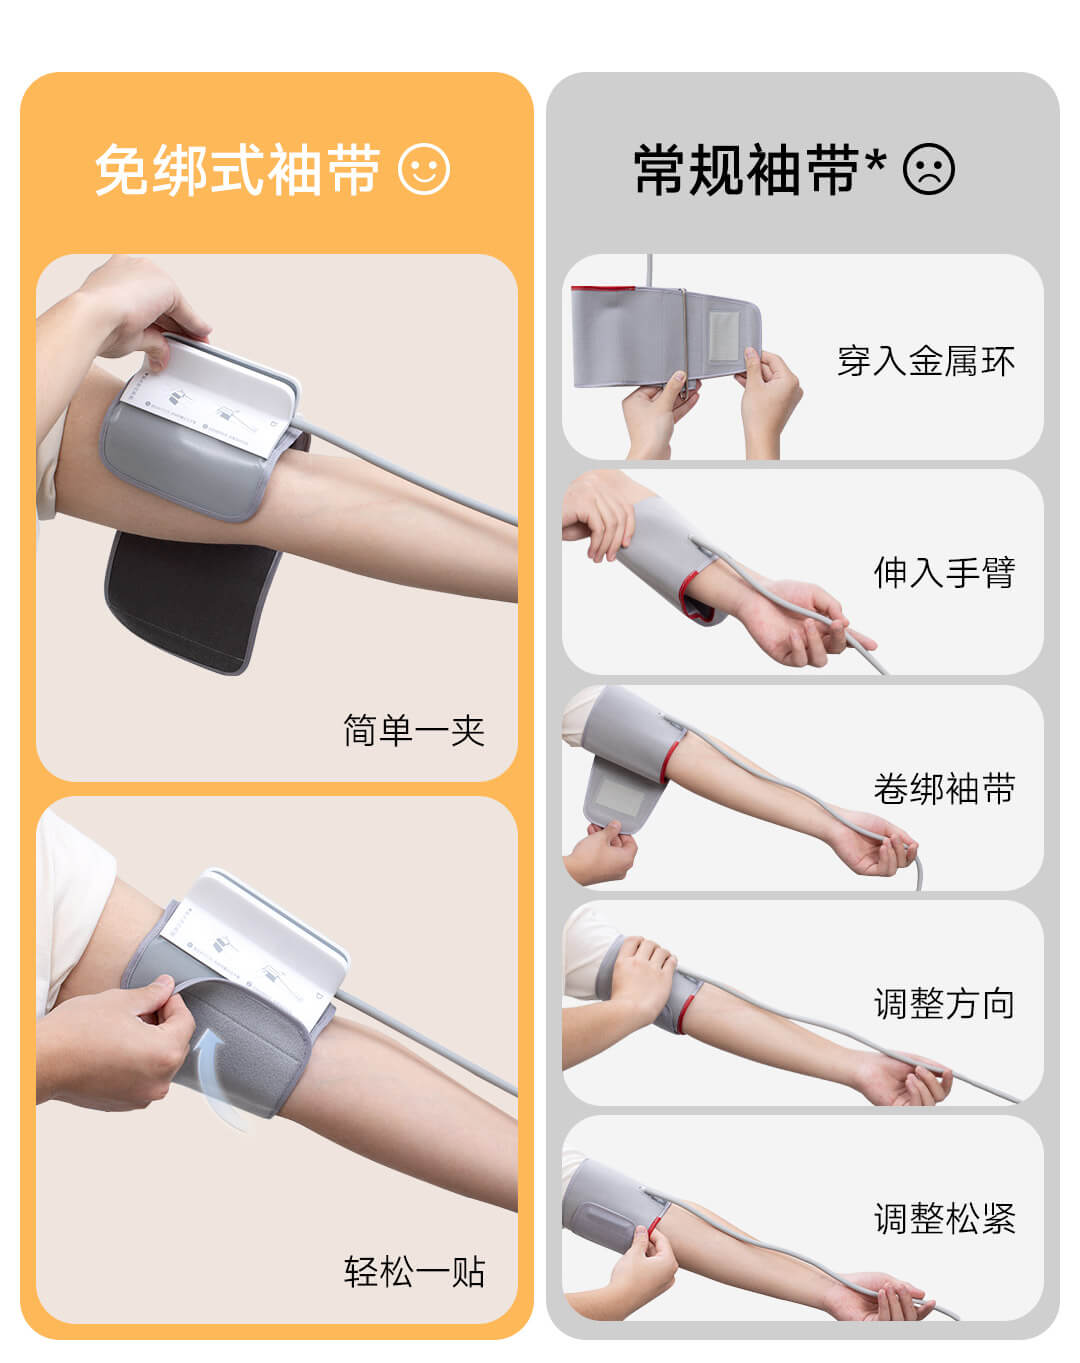 Xiaomi Mijia Smart Bluetooth Usb Rechargeable Arm Blood Pressure Monitor  Digital Sphygmomanometer Work With Mijiaapp - Smart Remote Control -  AliExpress